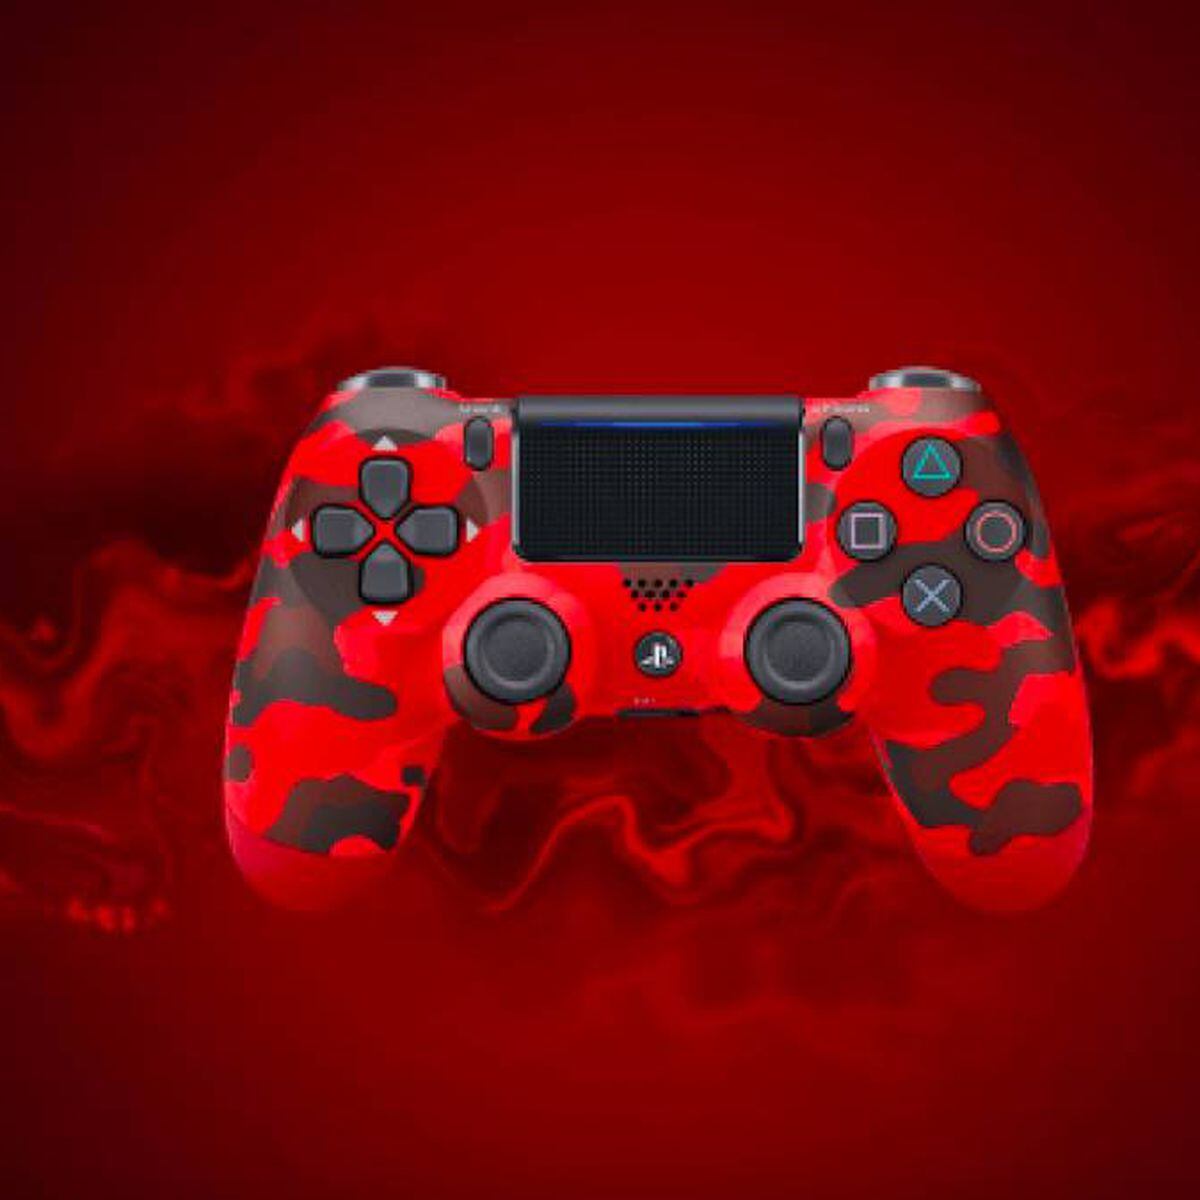 MANDO PS4 DUALSHOCK Color Rojo Camuflaje Original Playstation 4